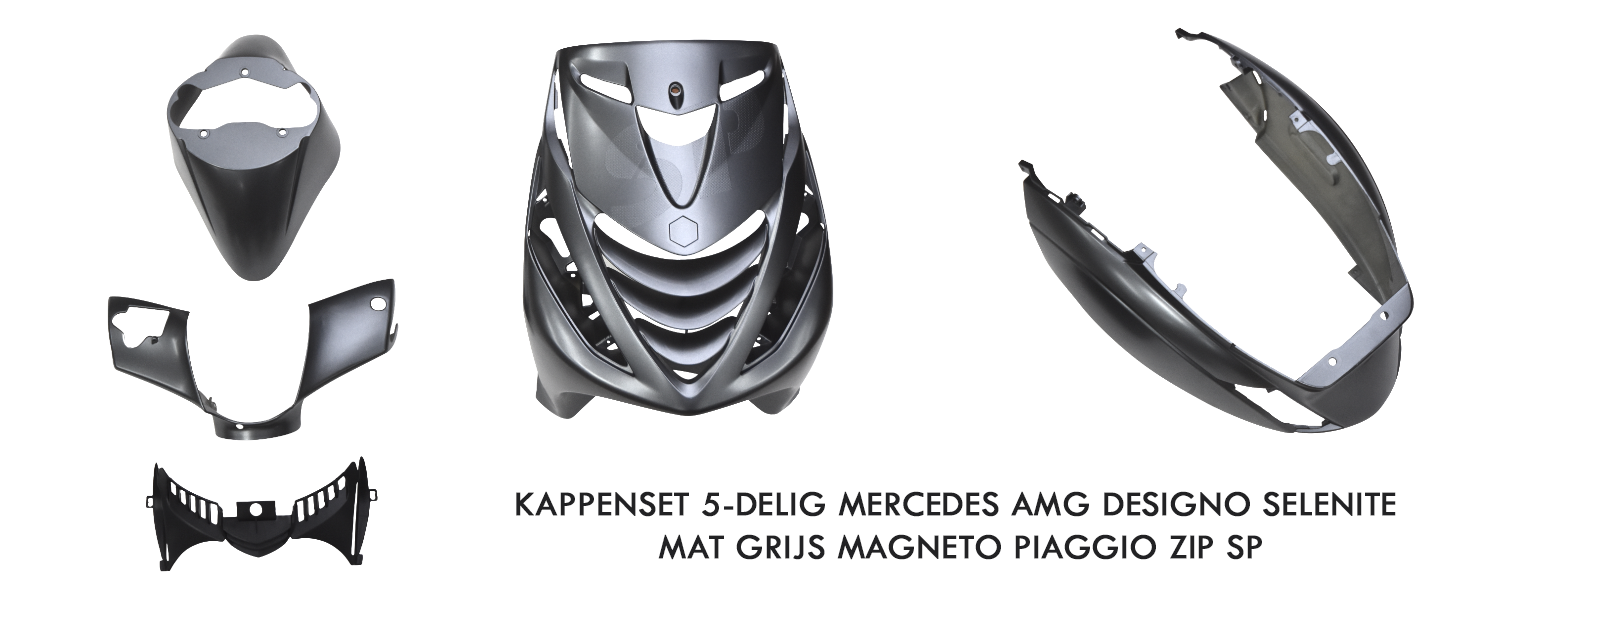 Kappenset 5-delig Mercedes AMG Designo Selenite Mat Grijs Magneto Piaggio Zip SP